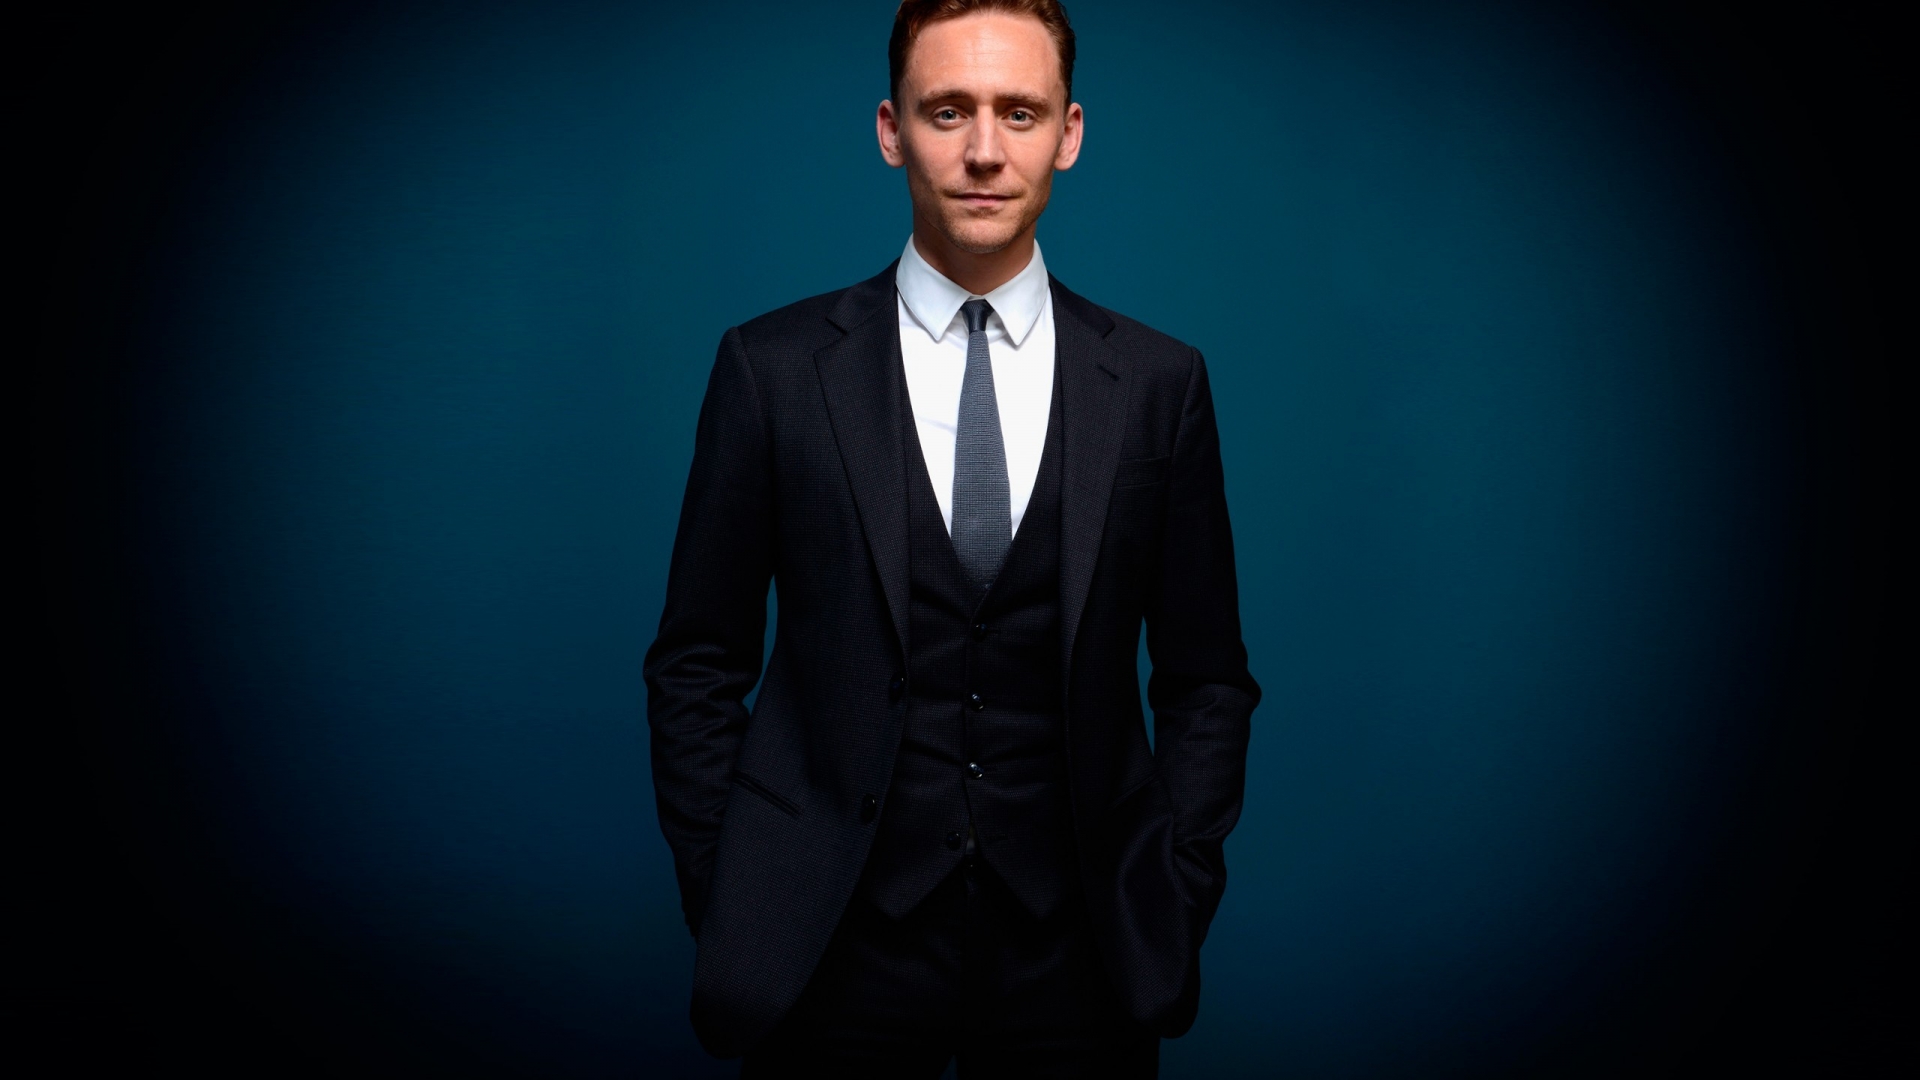 Tom Hiddleston Elegant Look for 1920 x 1080 HDTV 1080p resolution